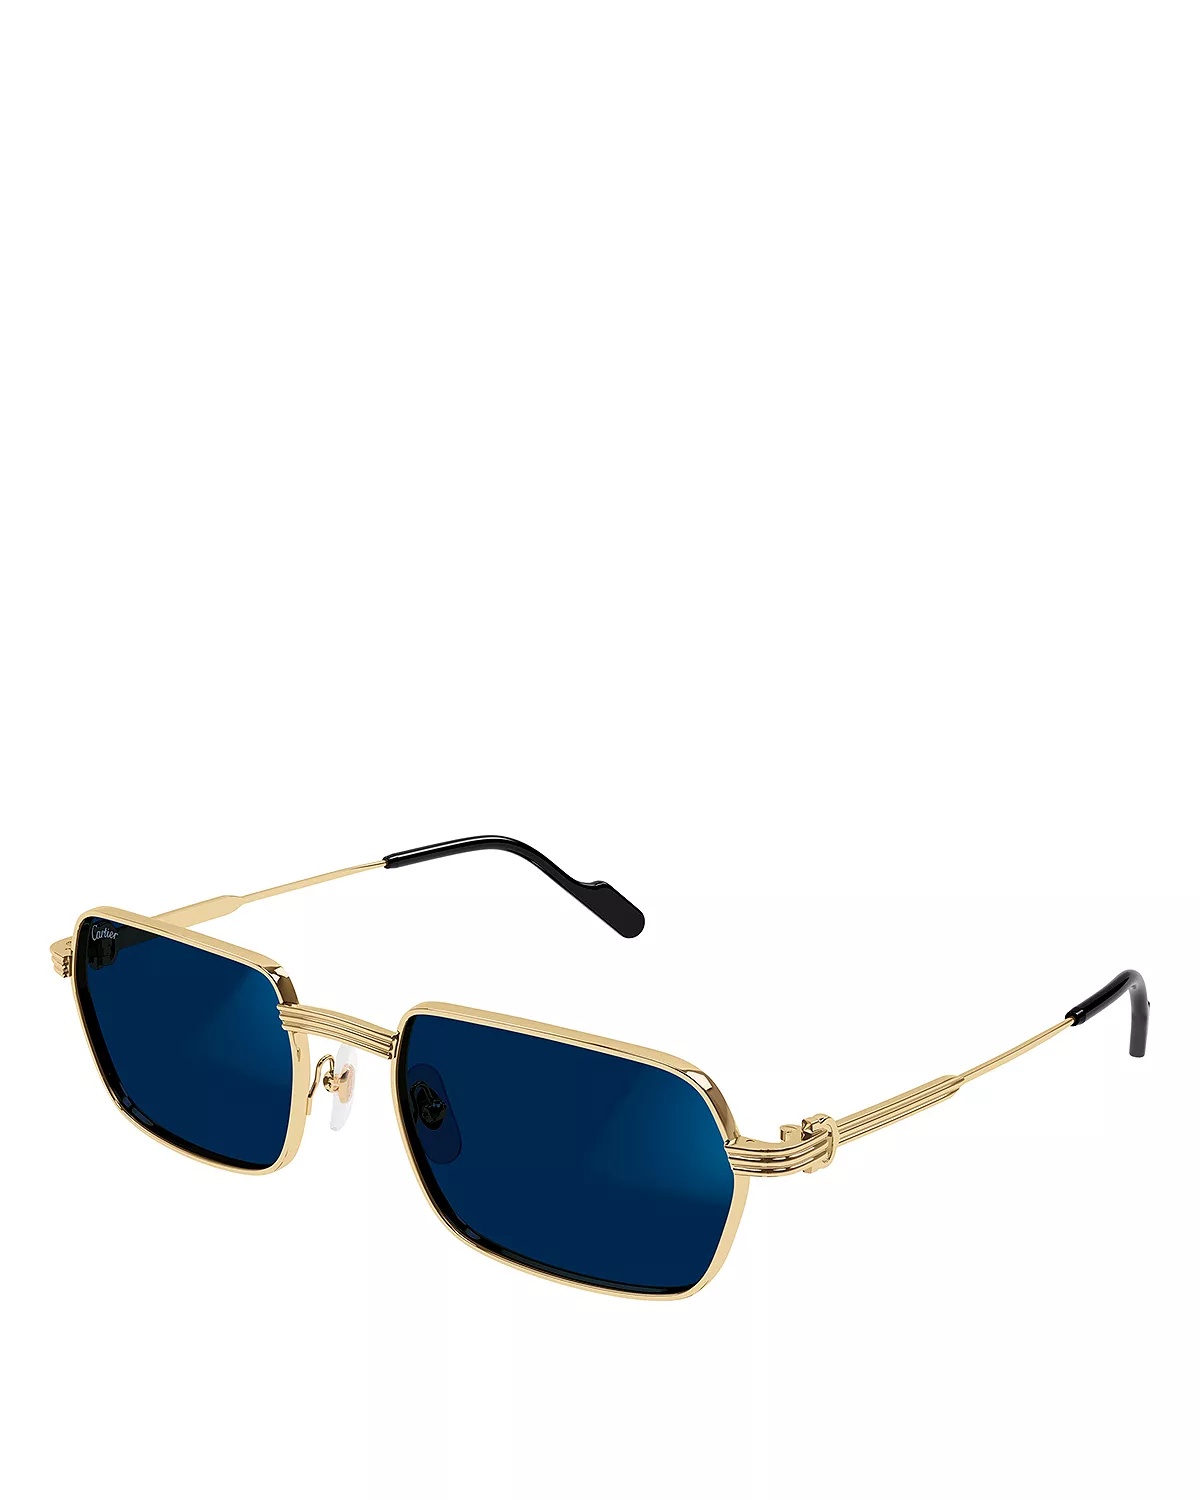 Premiere De Cartier 24 Carat Gold Plated Photochromatic Rectangular Sunglasses, 56mm - 3